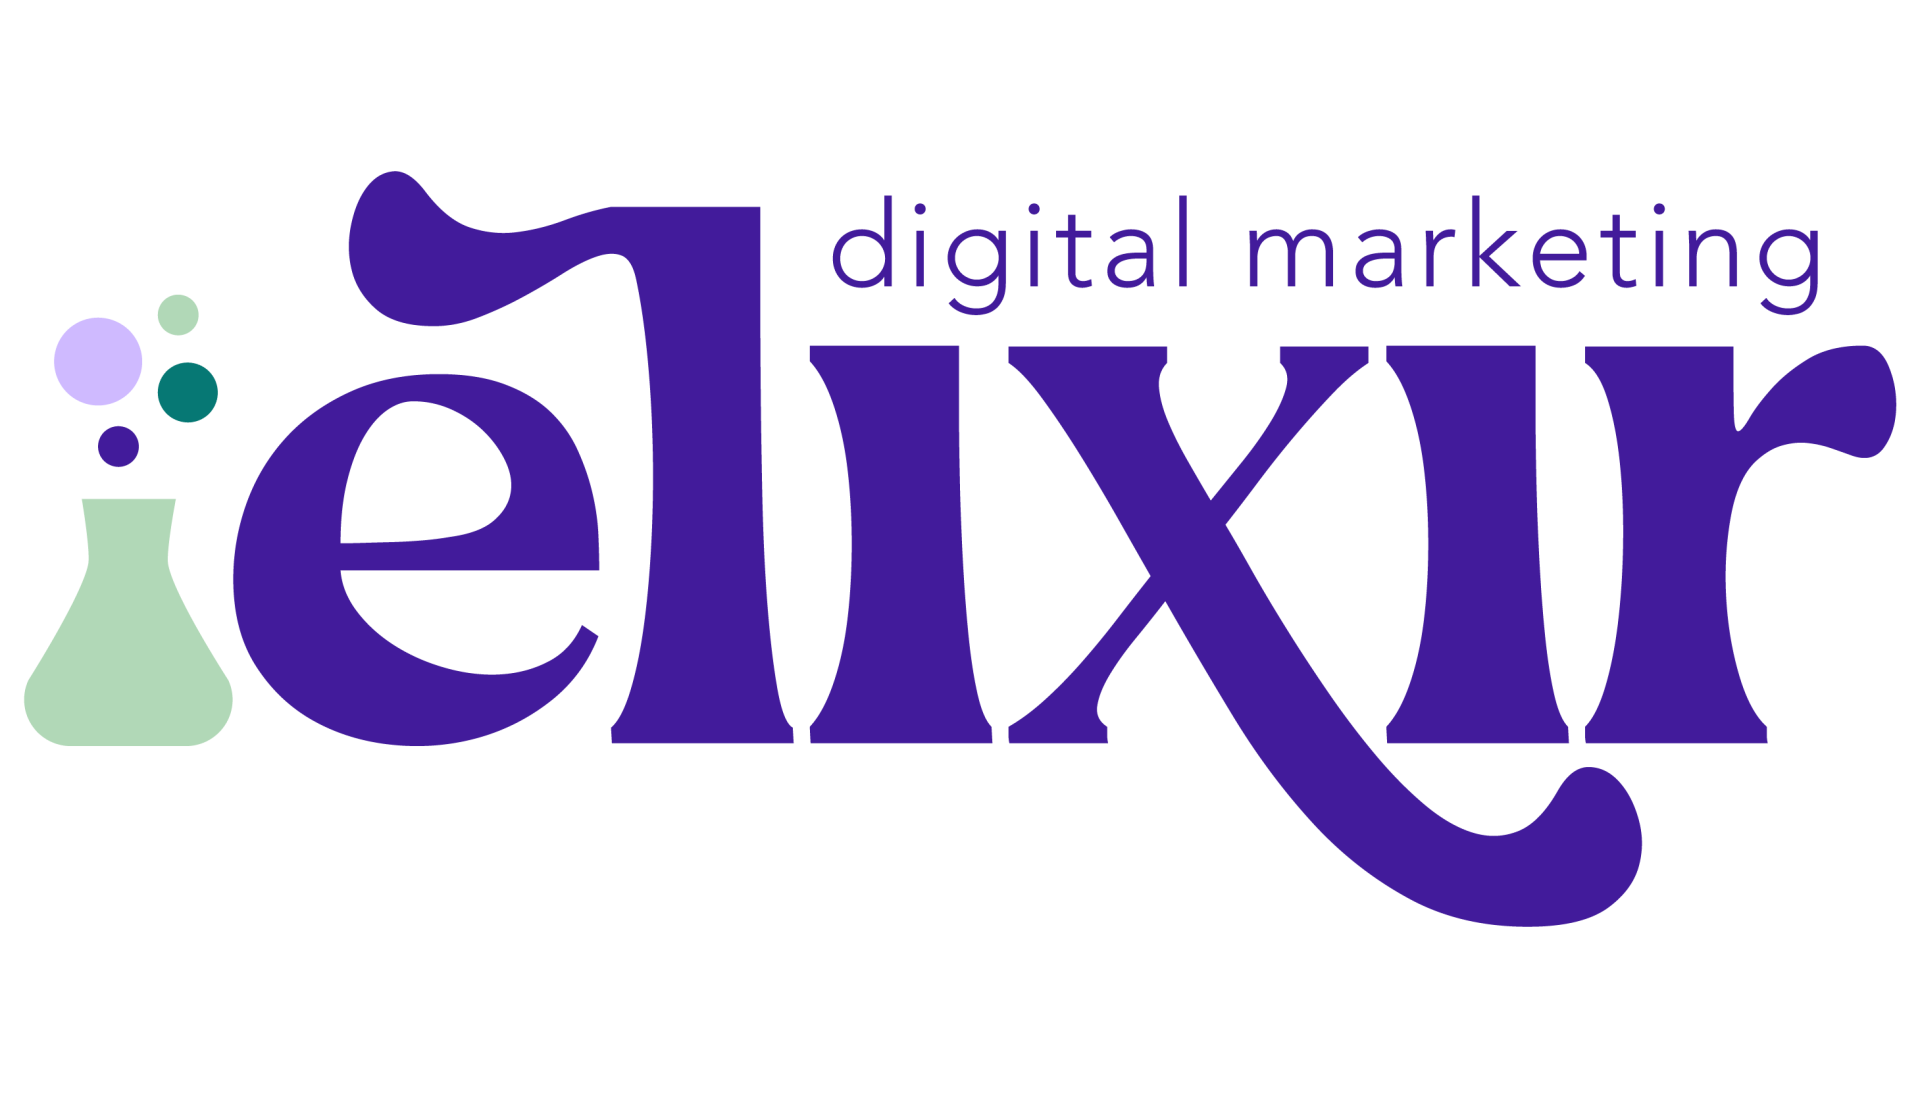 elixir digital marketing logo